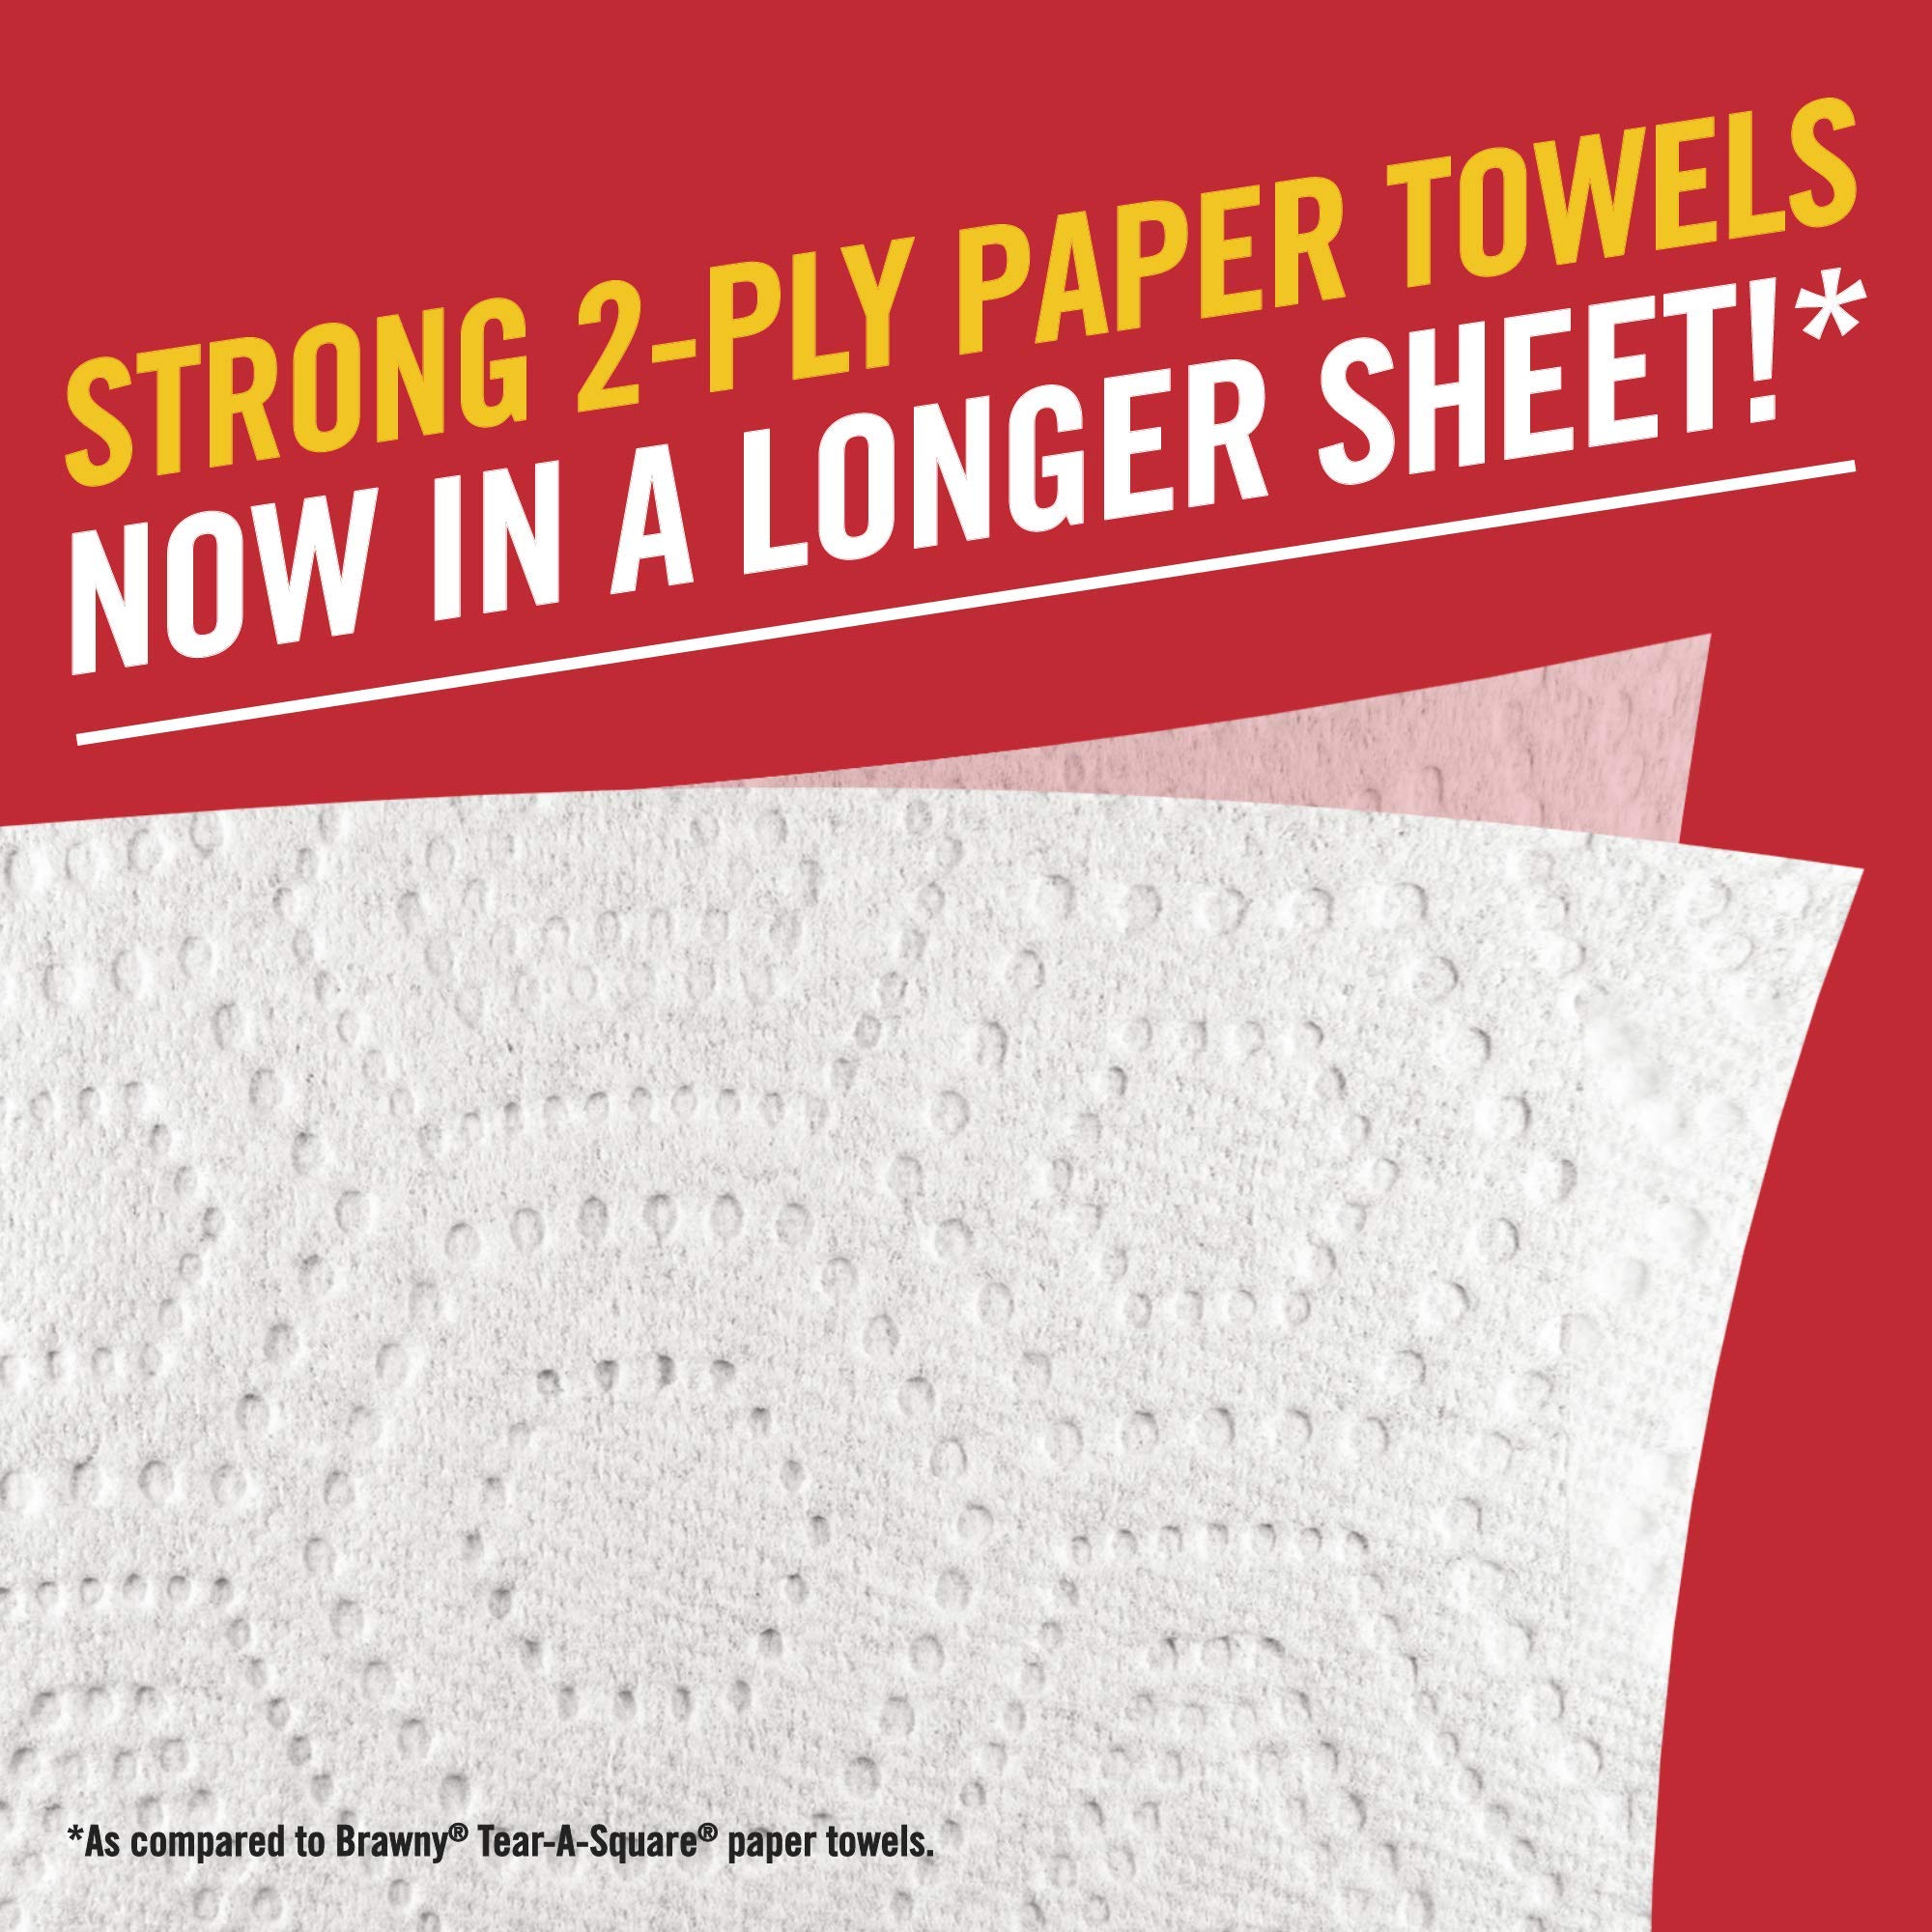 Brawny Tear-A-Square Paper Towels, 16 Double Rolls = 32 Regular Rolls, 3 Sheet Size Options, Quarter Size Sheets